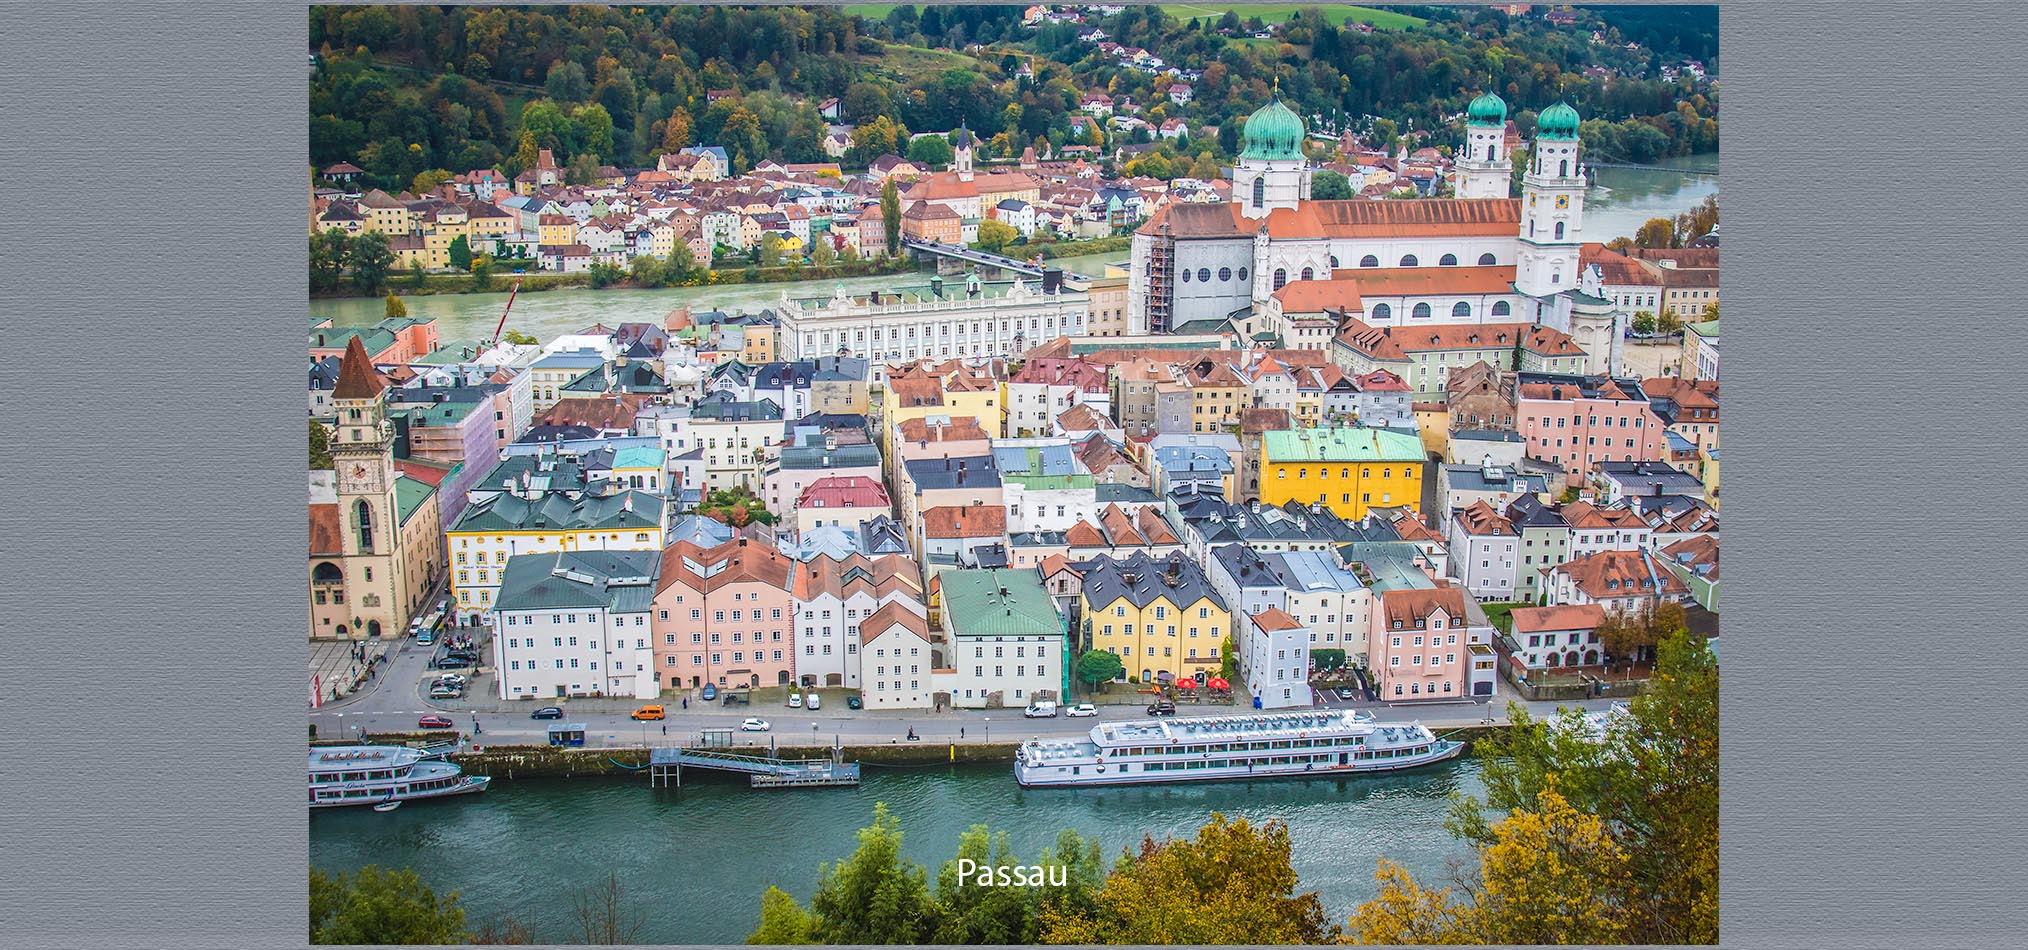 15-10 Passau-106.jpg